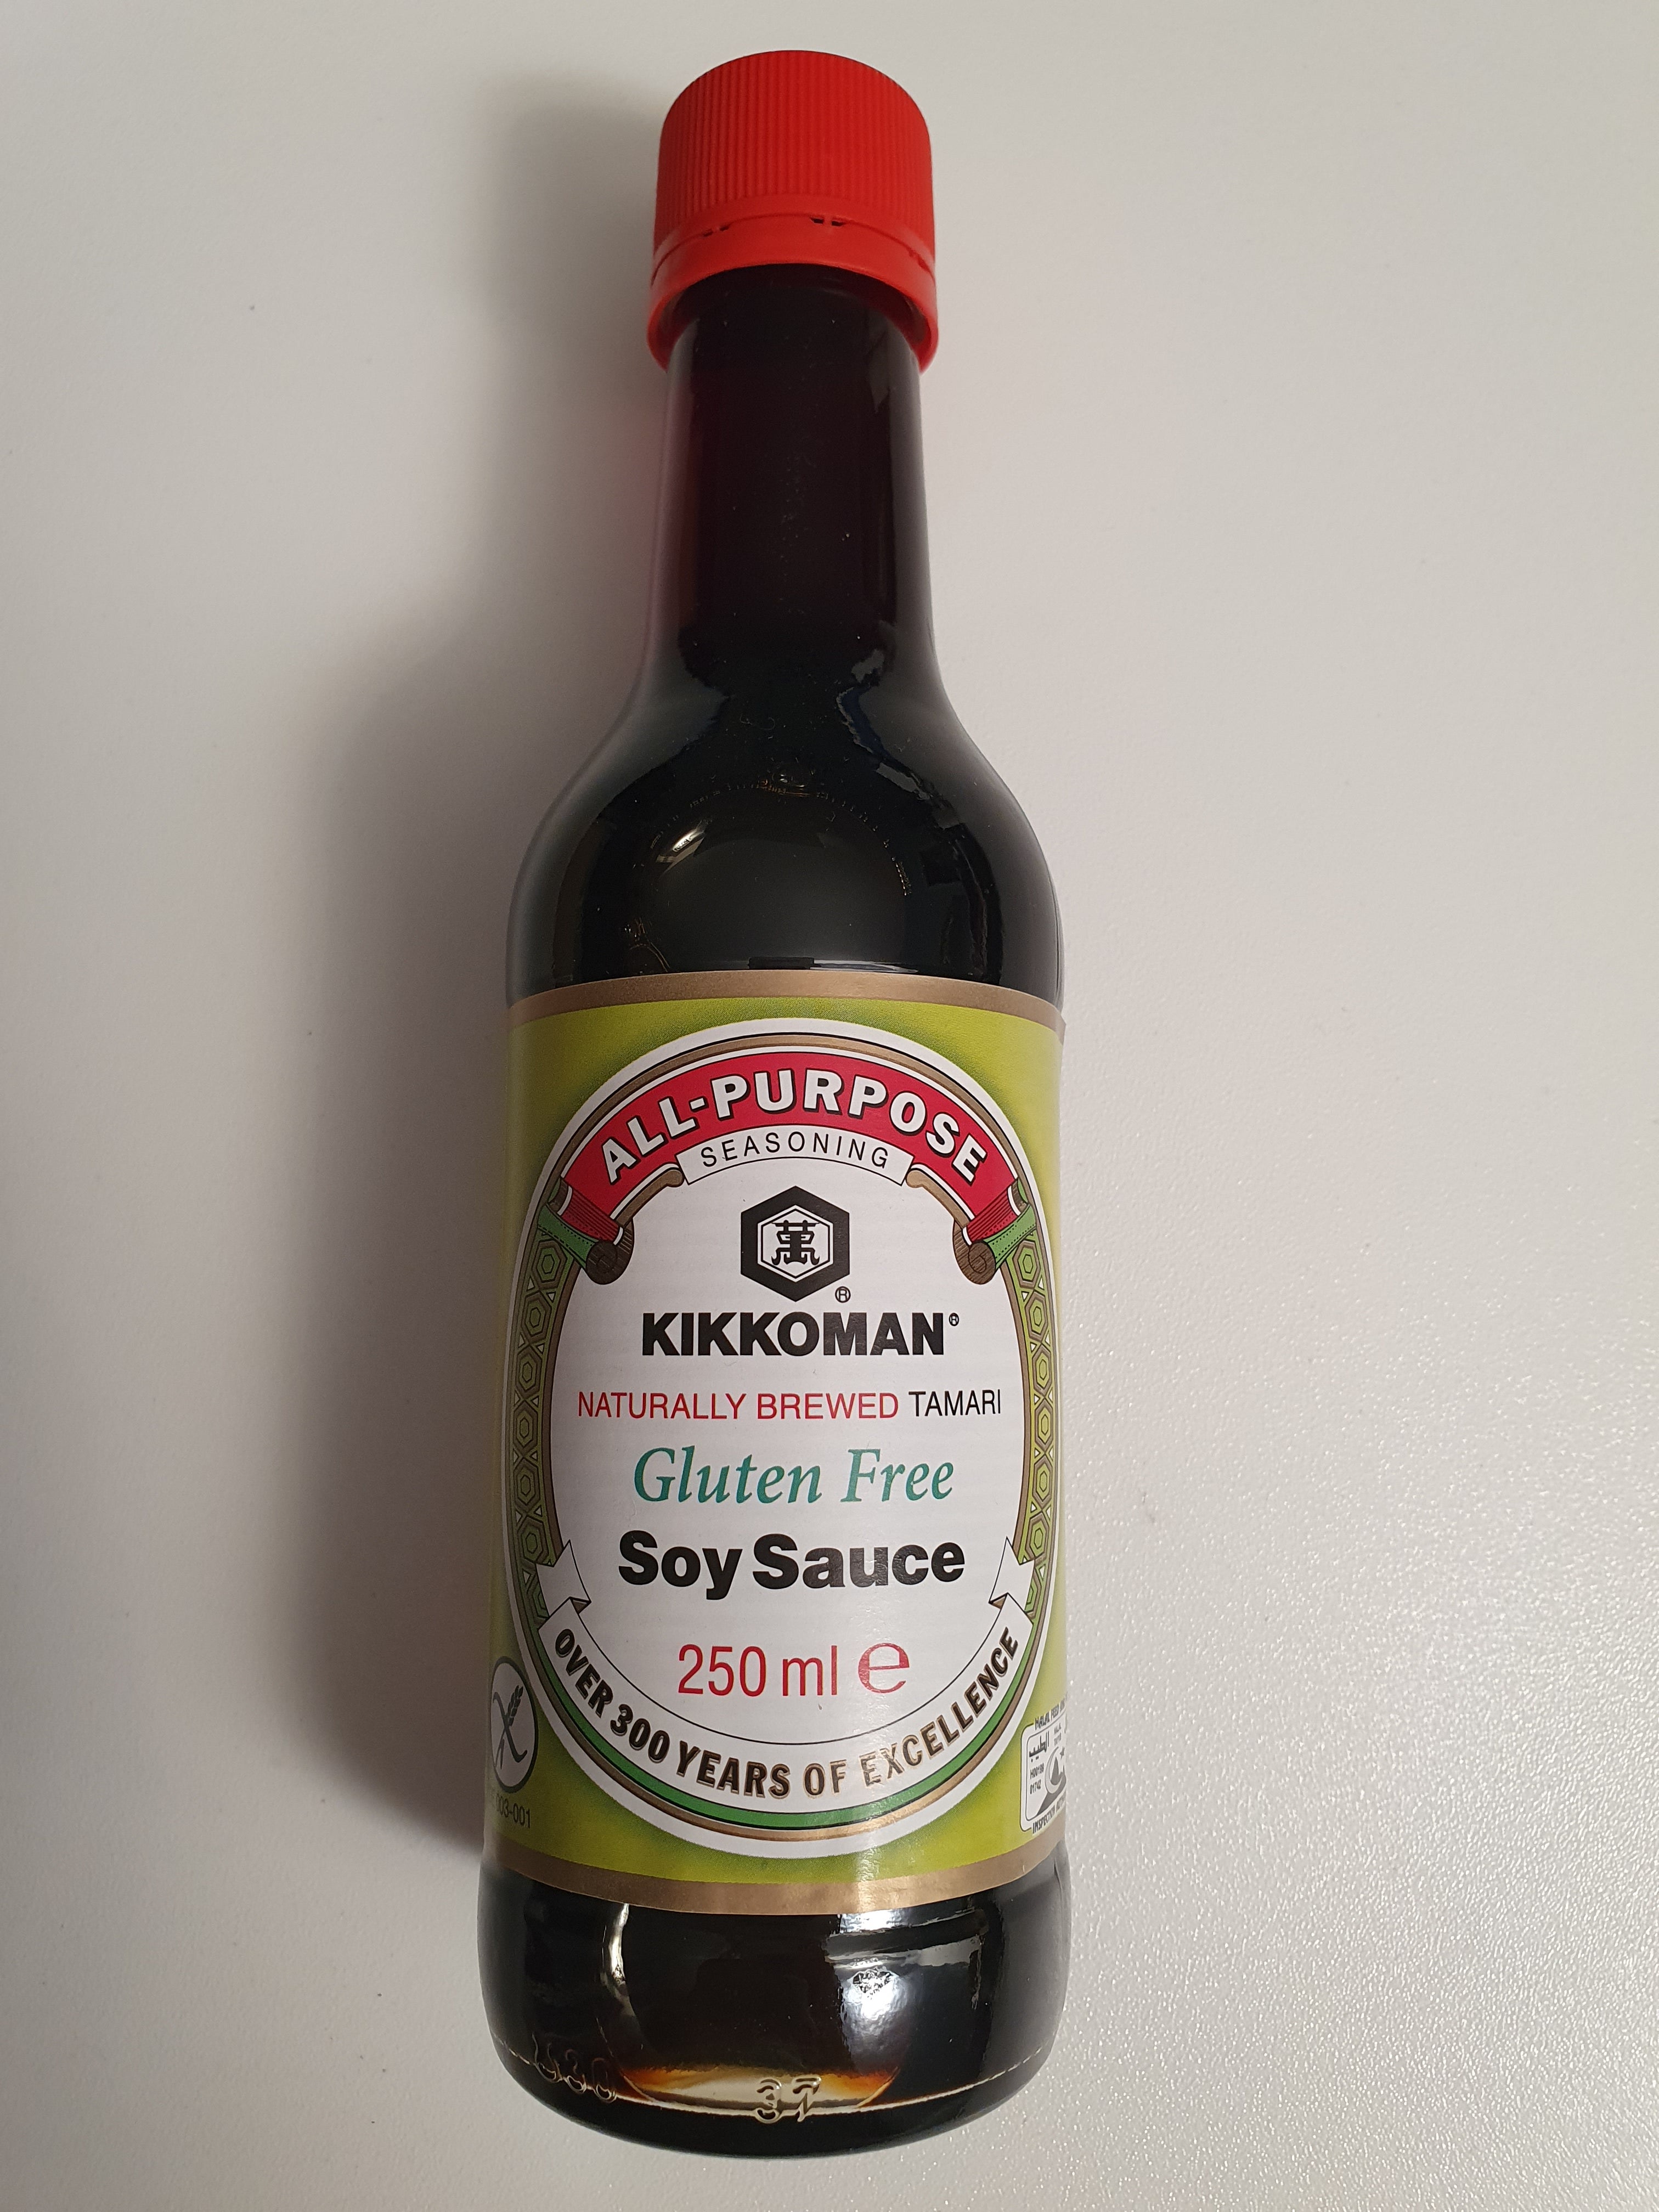 Salsa di soia kikkoman in bottiglia da 500ml